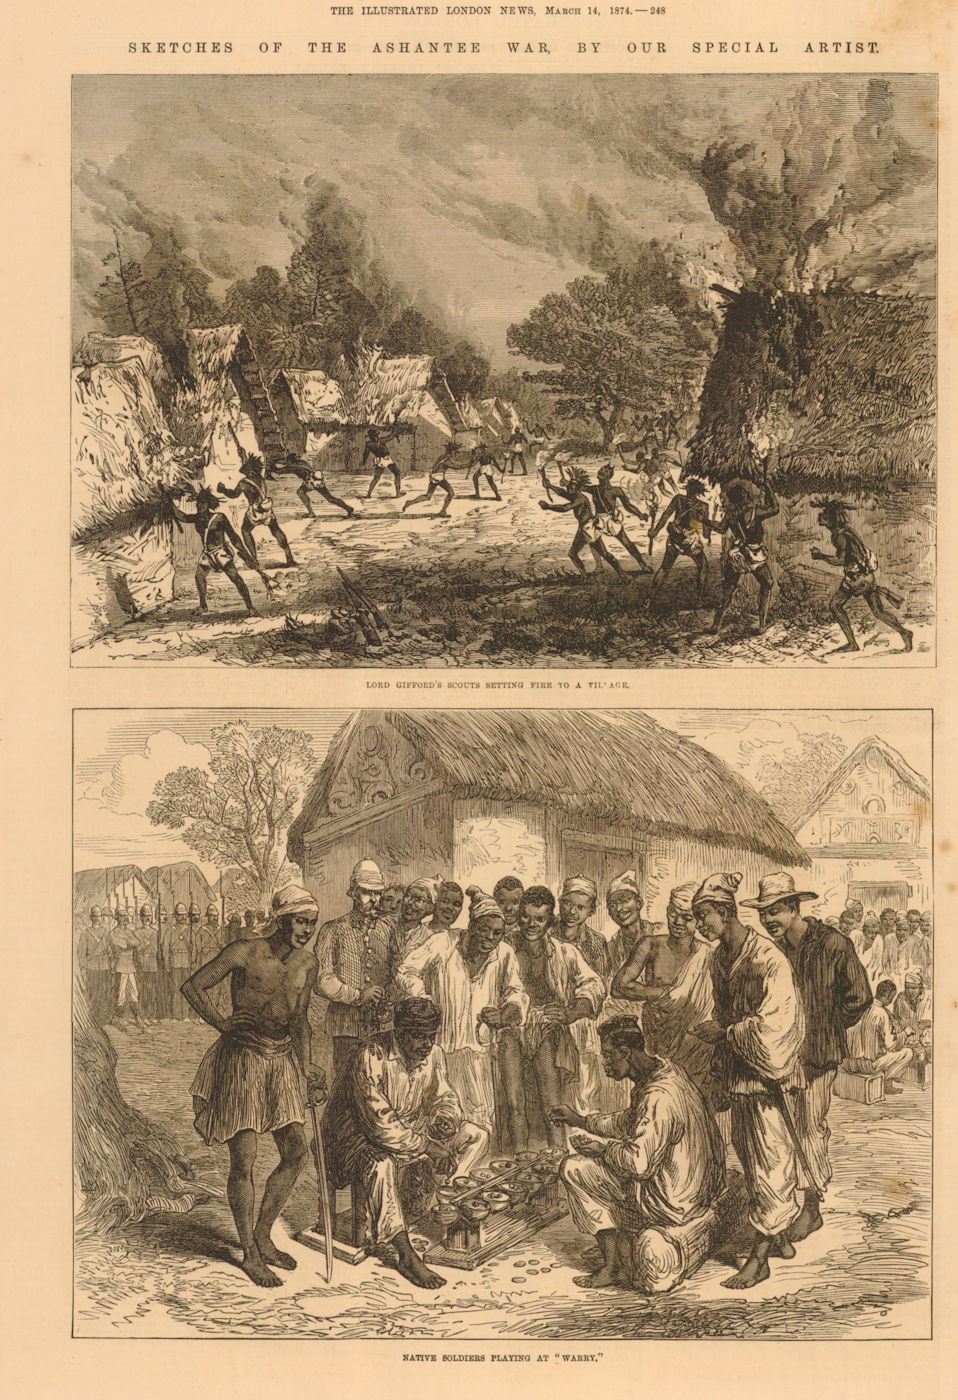 Associate Product 3rd Ashanti War. Lord Gifford's scouts burn village. Natives Warry. Ghana 1874